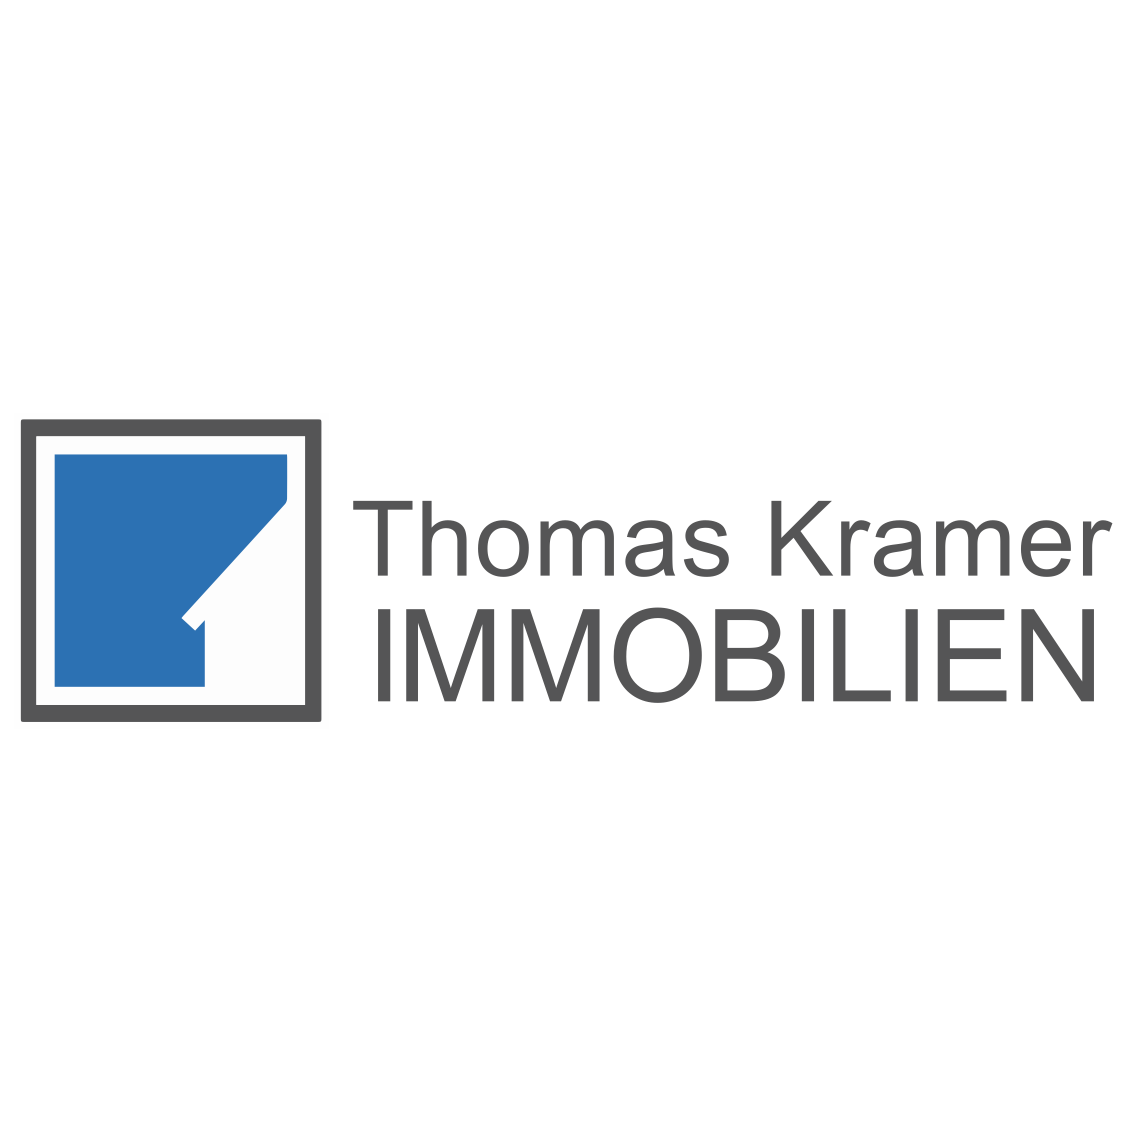 Thomas Kramer IMMOBILIEN in Wuppertal